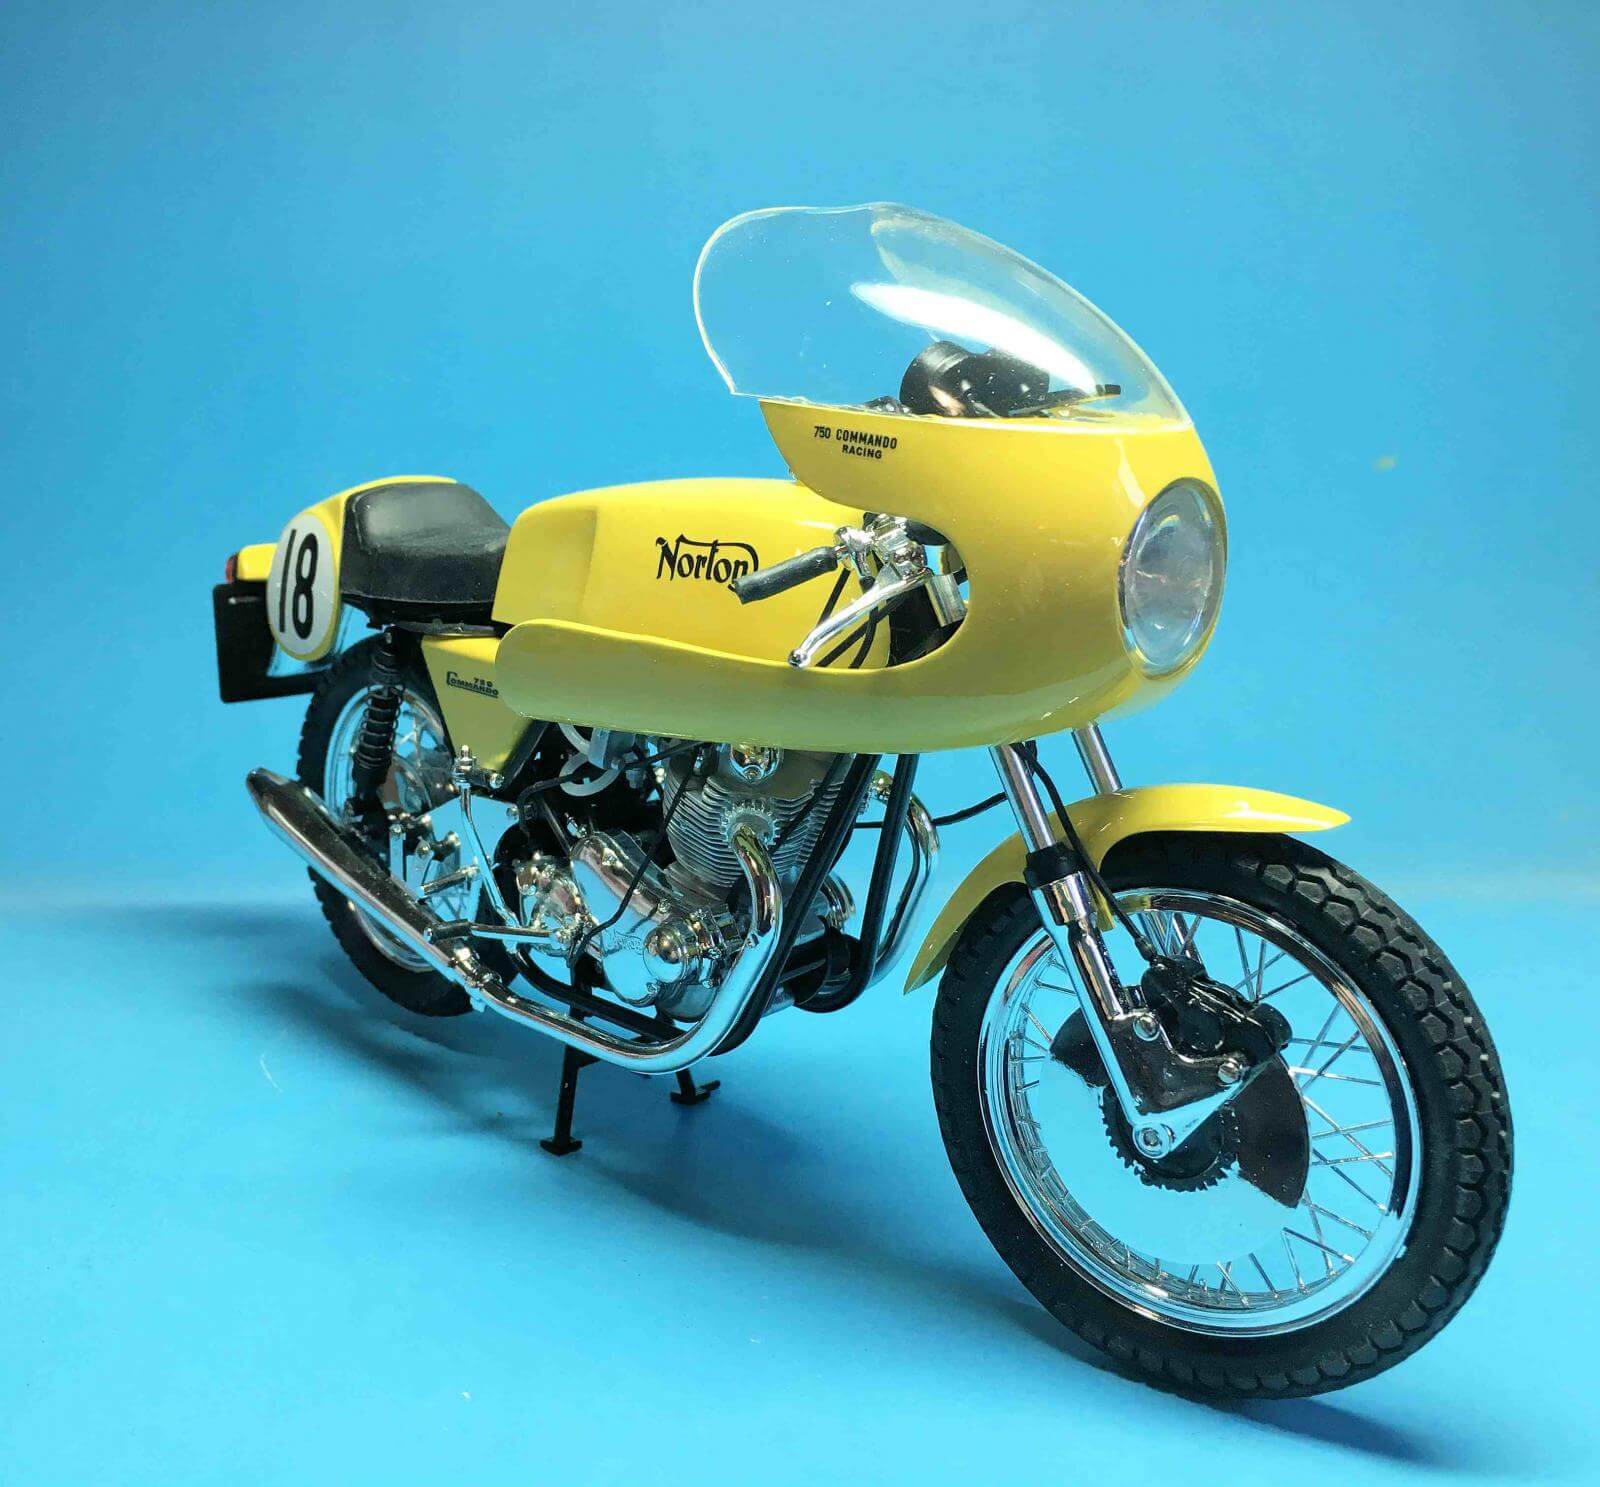 1:9 Scale Norton Commando 750cc Disc Classis Motorcycle Model Bike Kit